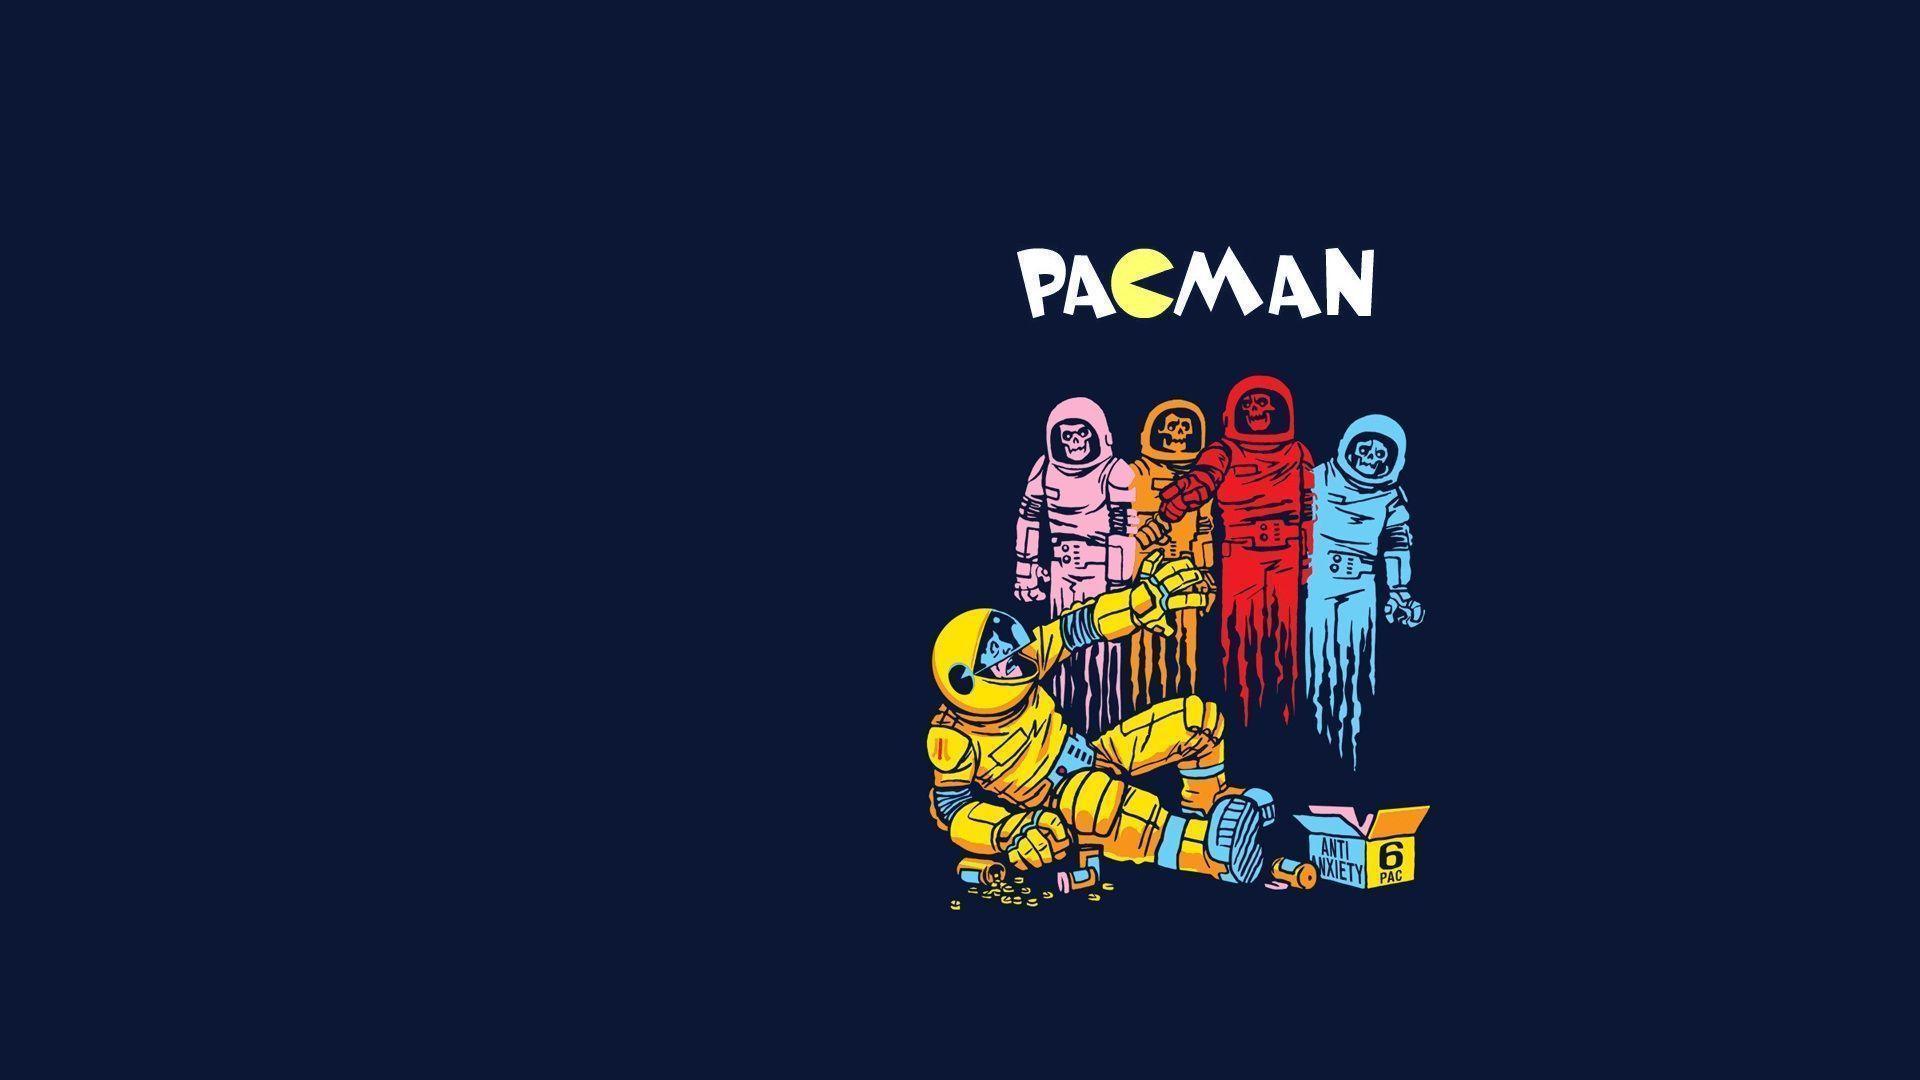 Pacman Wallpaper 5156 1920x1080 px